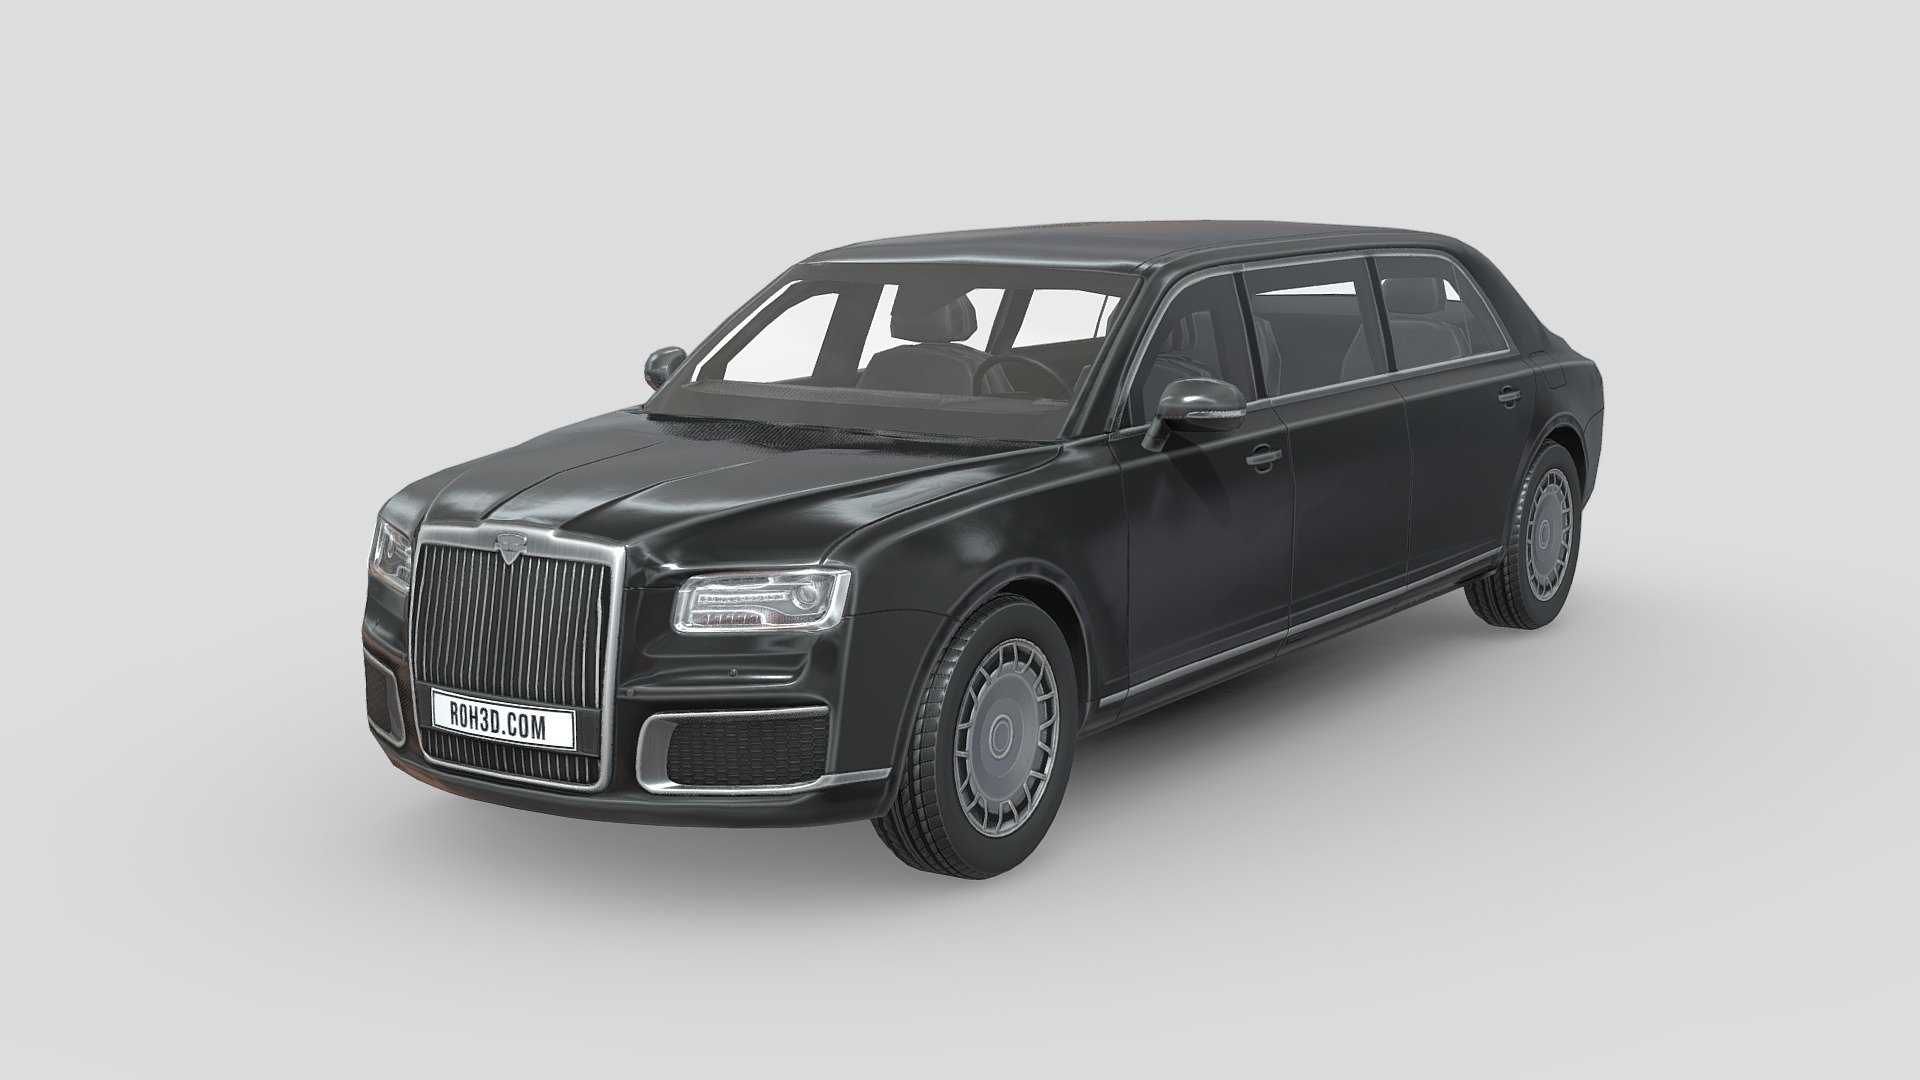 Aurus Senat, Russian luxury limousine, that carries also Russian